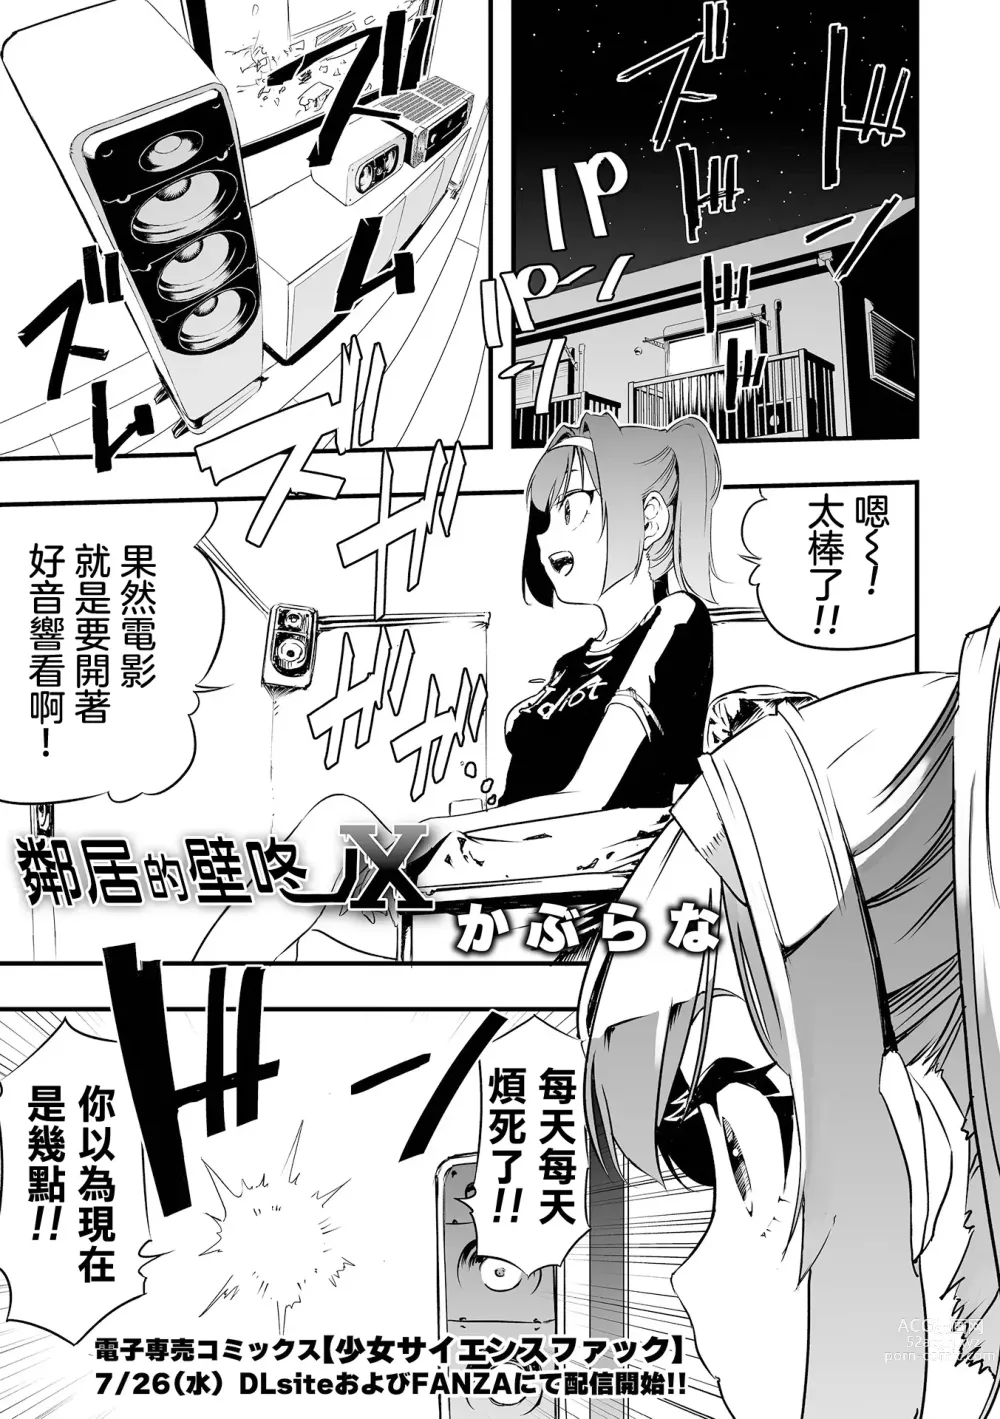 Page 2 of manga 鄰居的壁咚X